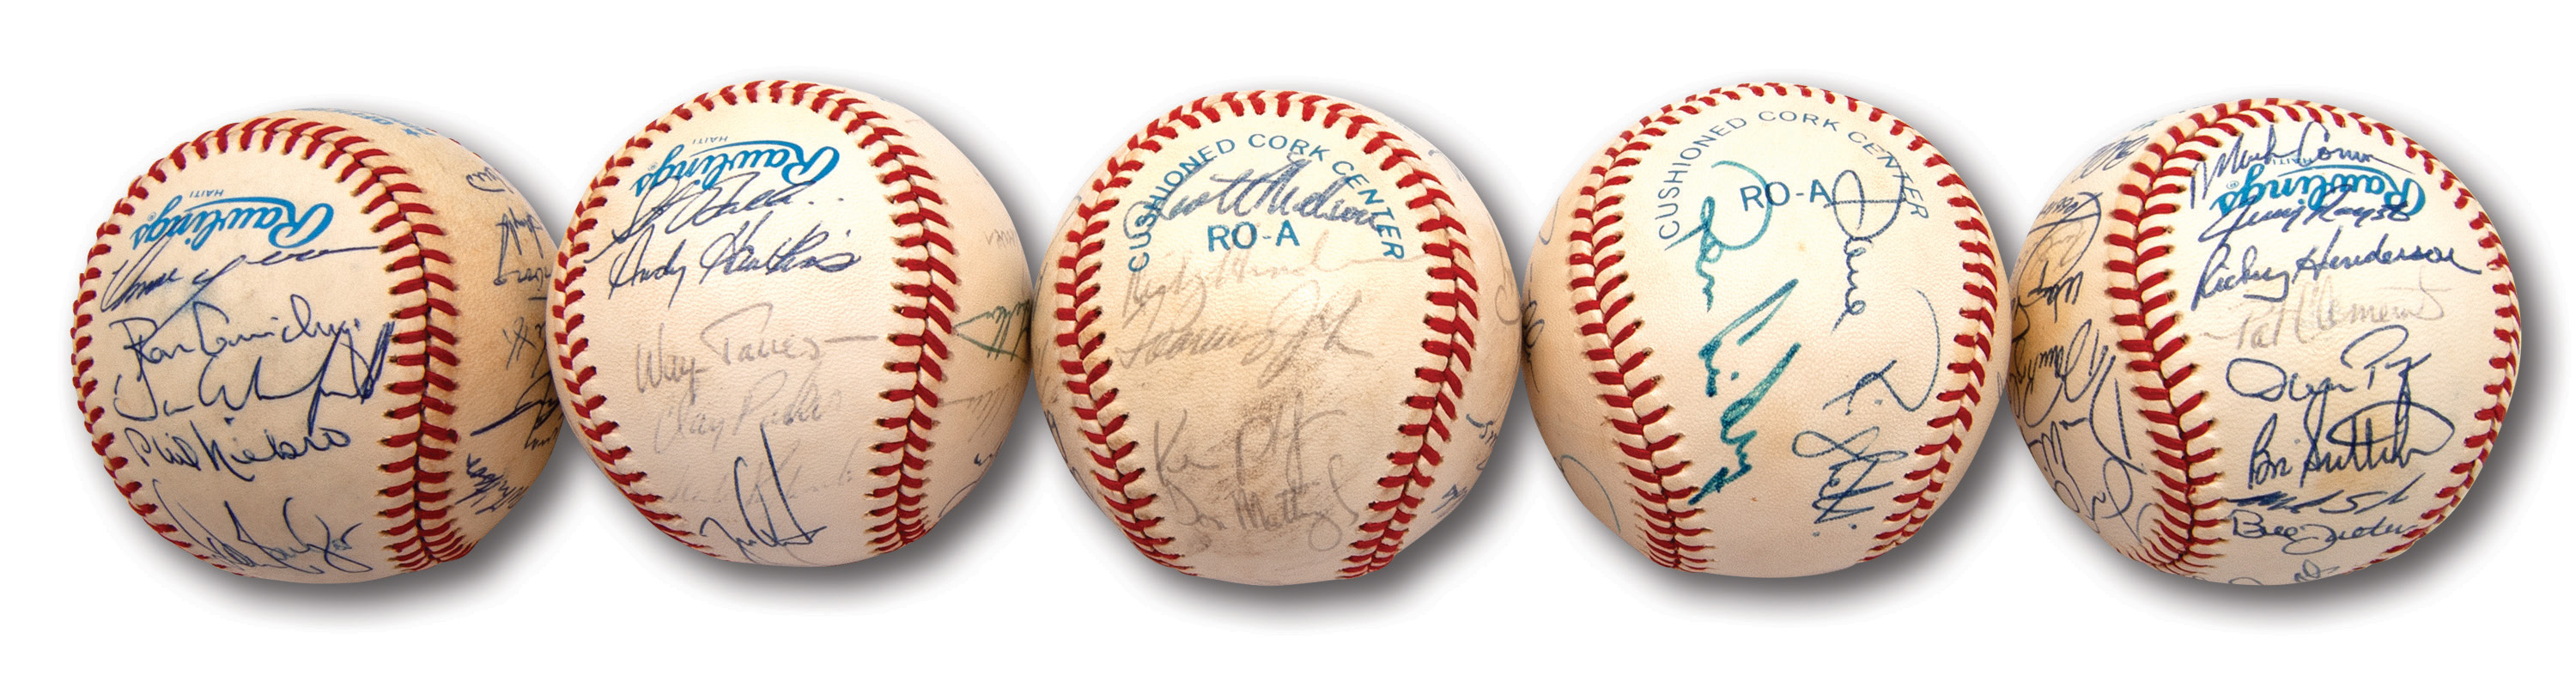 Lot Detail - 1985 World Series Team Signed Baseball Bat